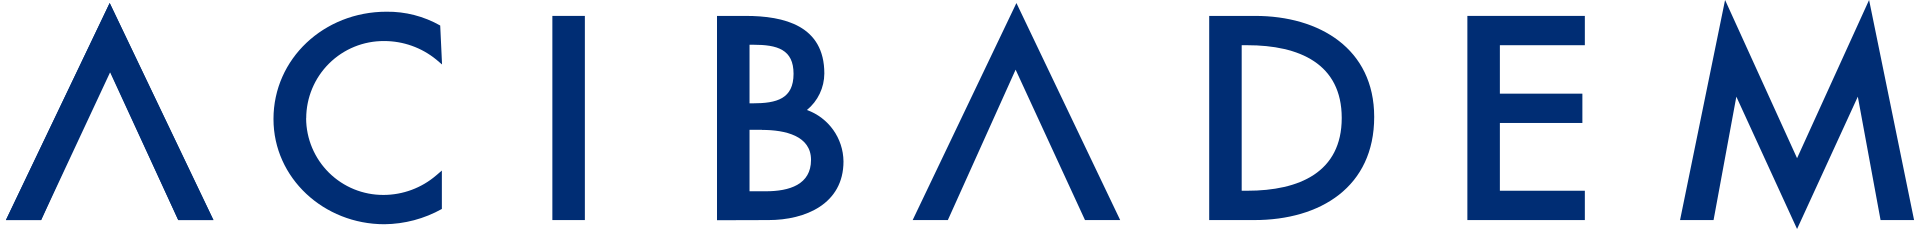 Acıbadem_Grup_logo